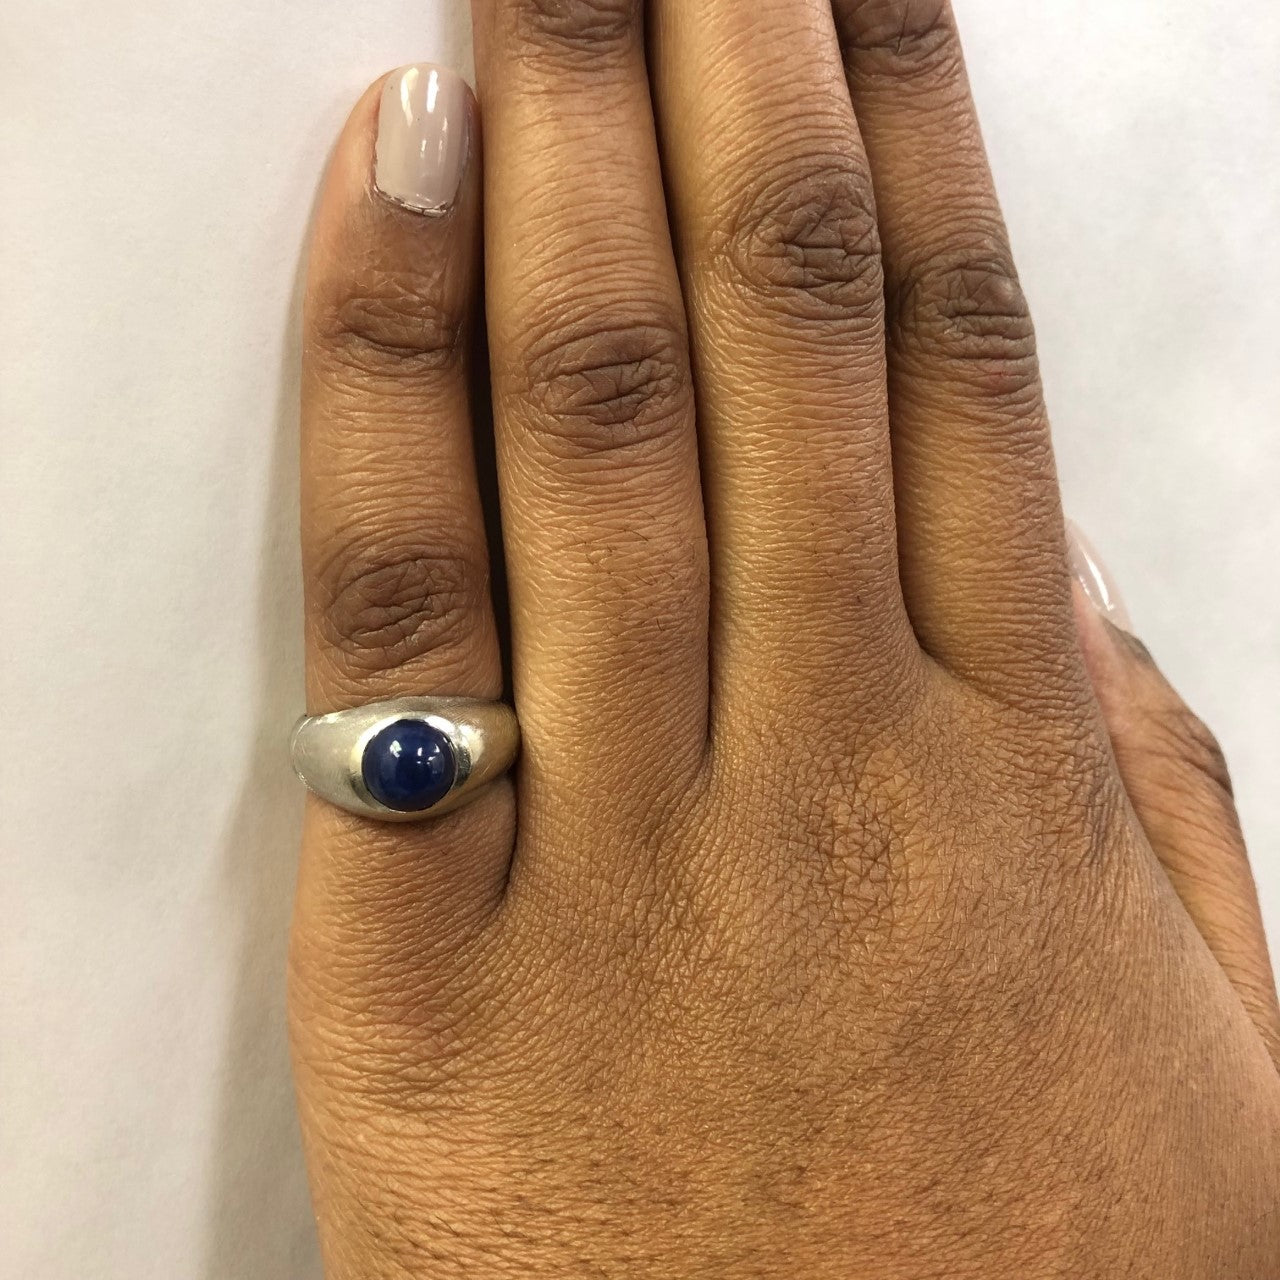 Bezel Set Synthetic Star Sapphire Ring | 2.75ct | SZ 6.25 |